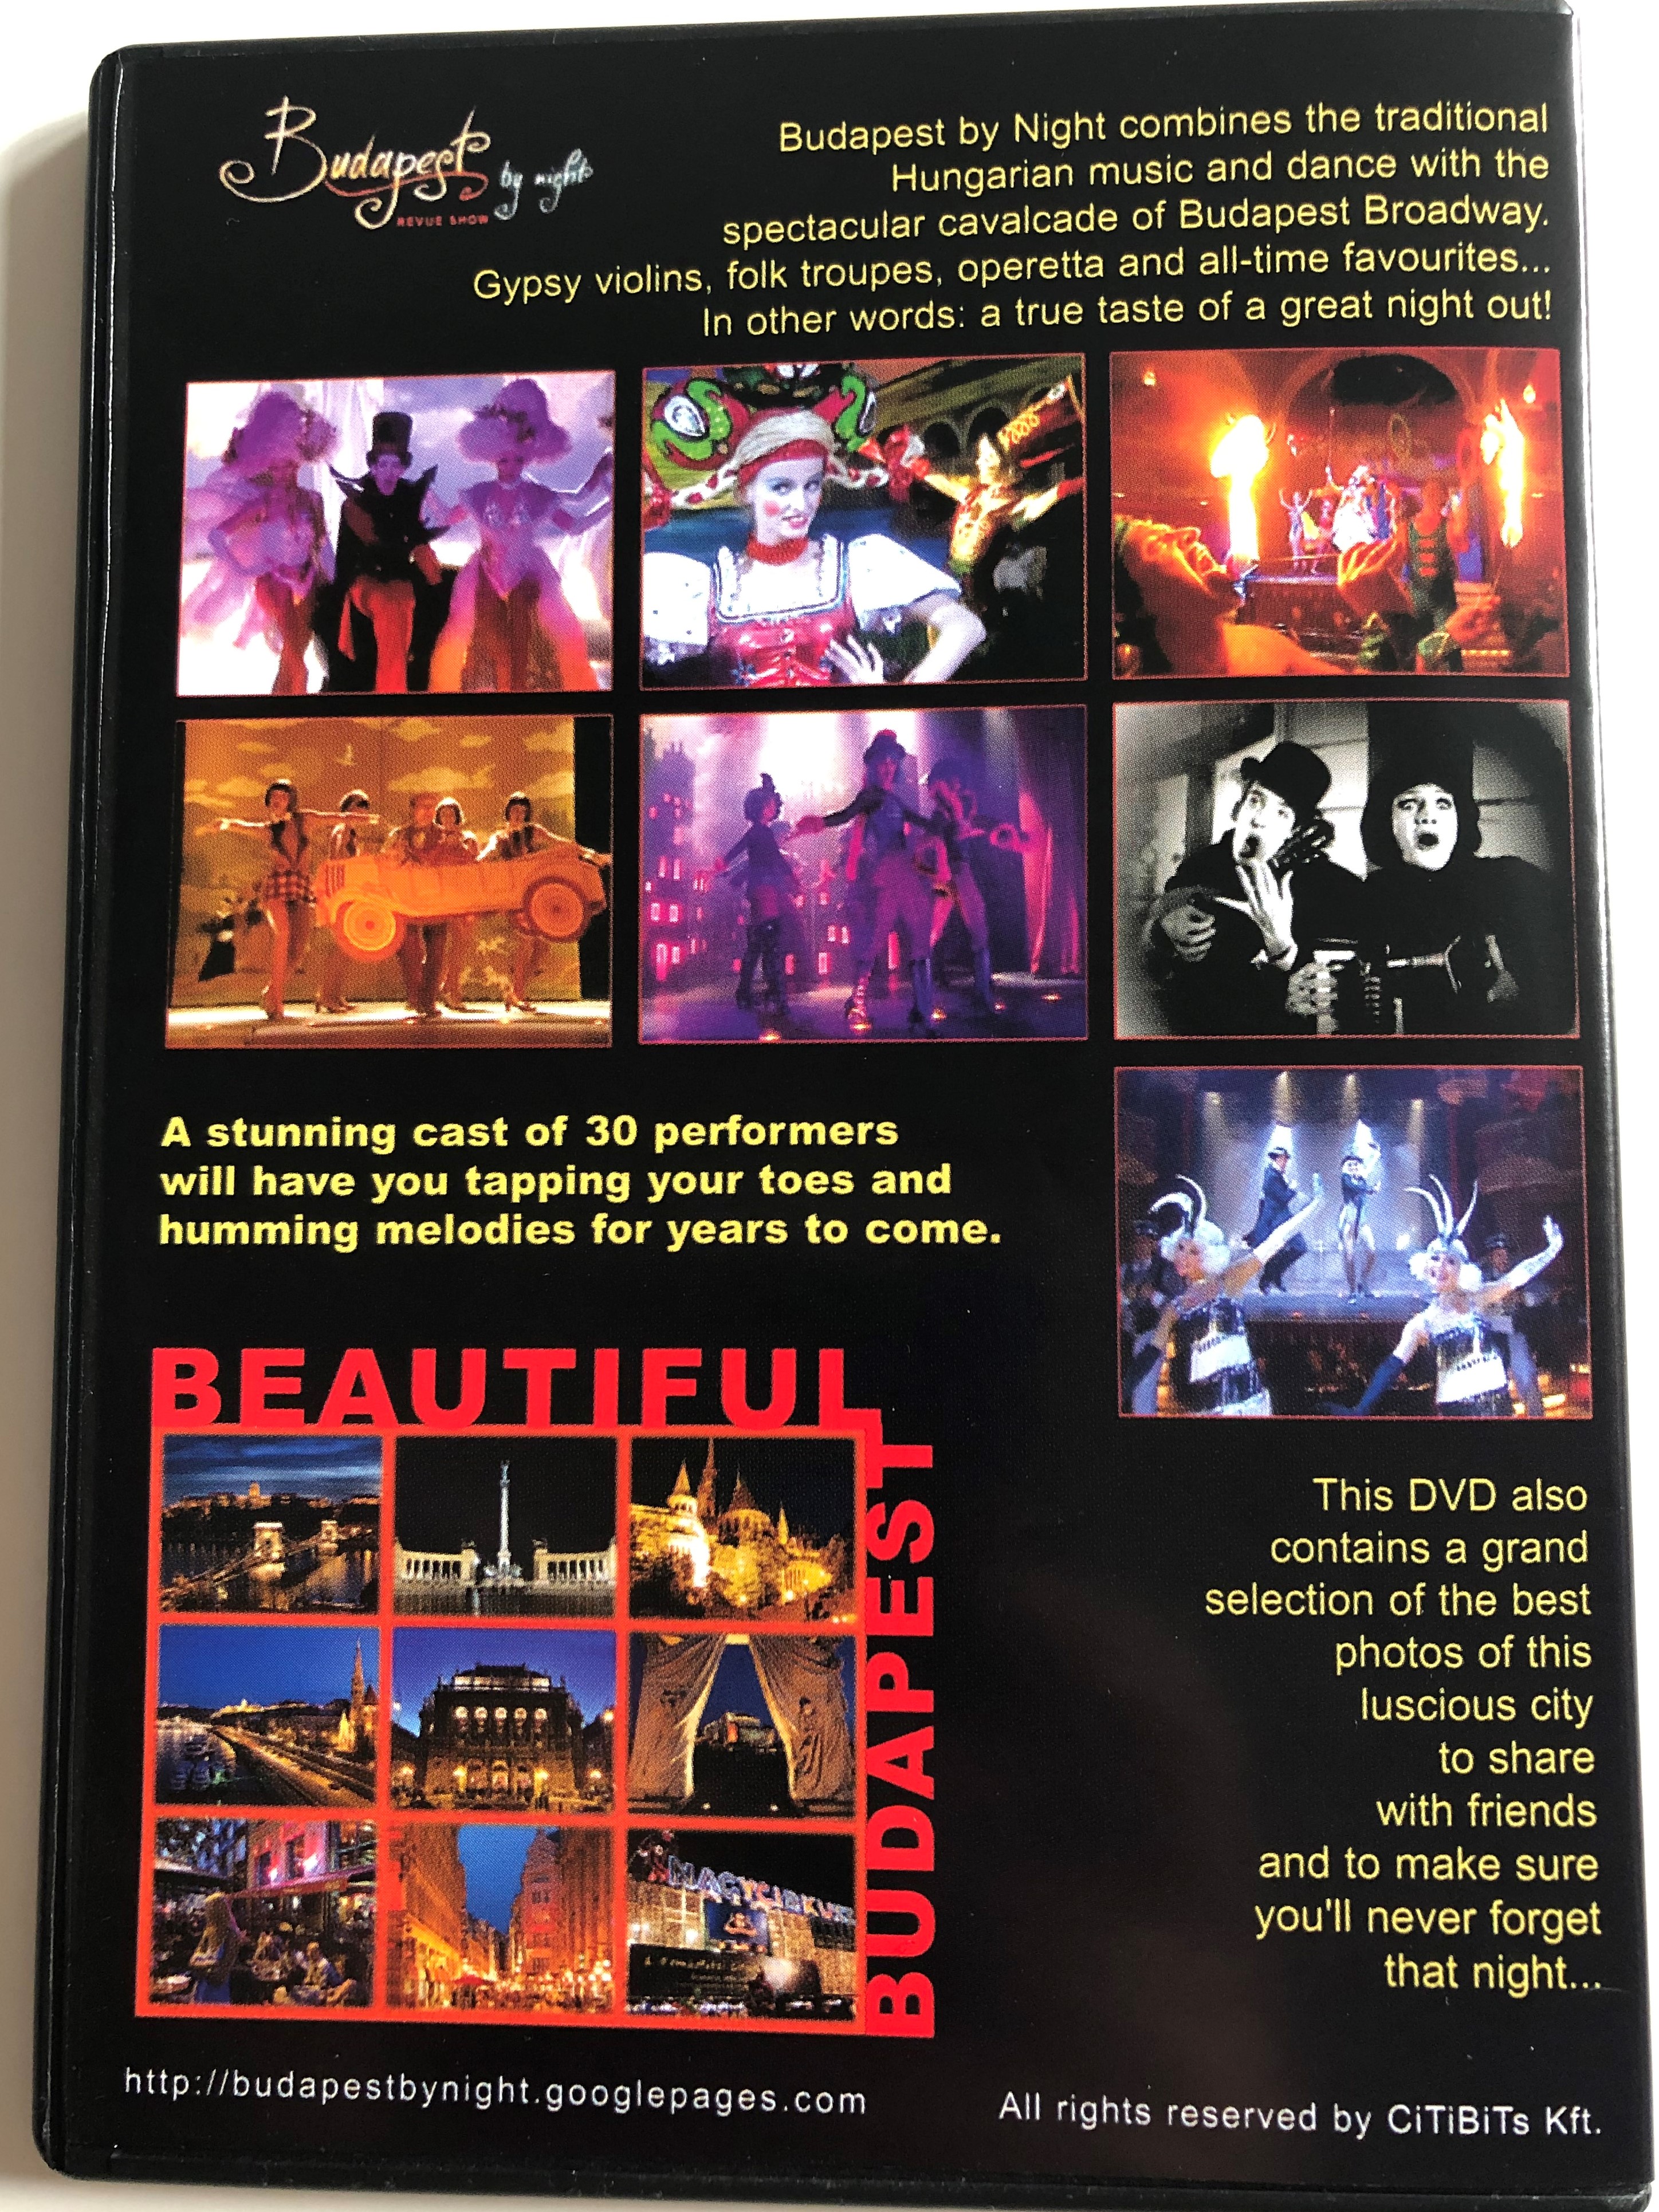 budapest-by-night-dvd-revue-show-3.jpg